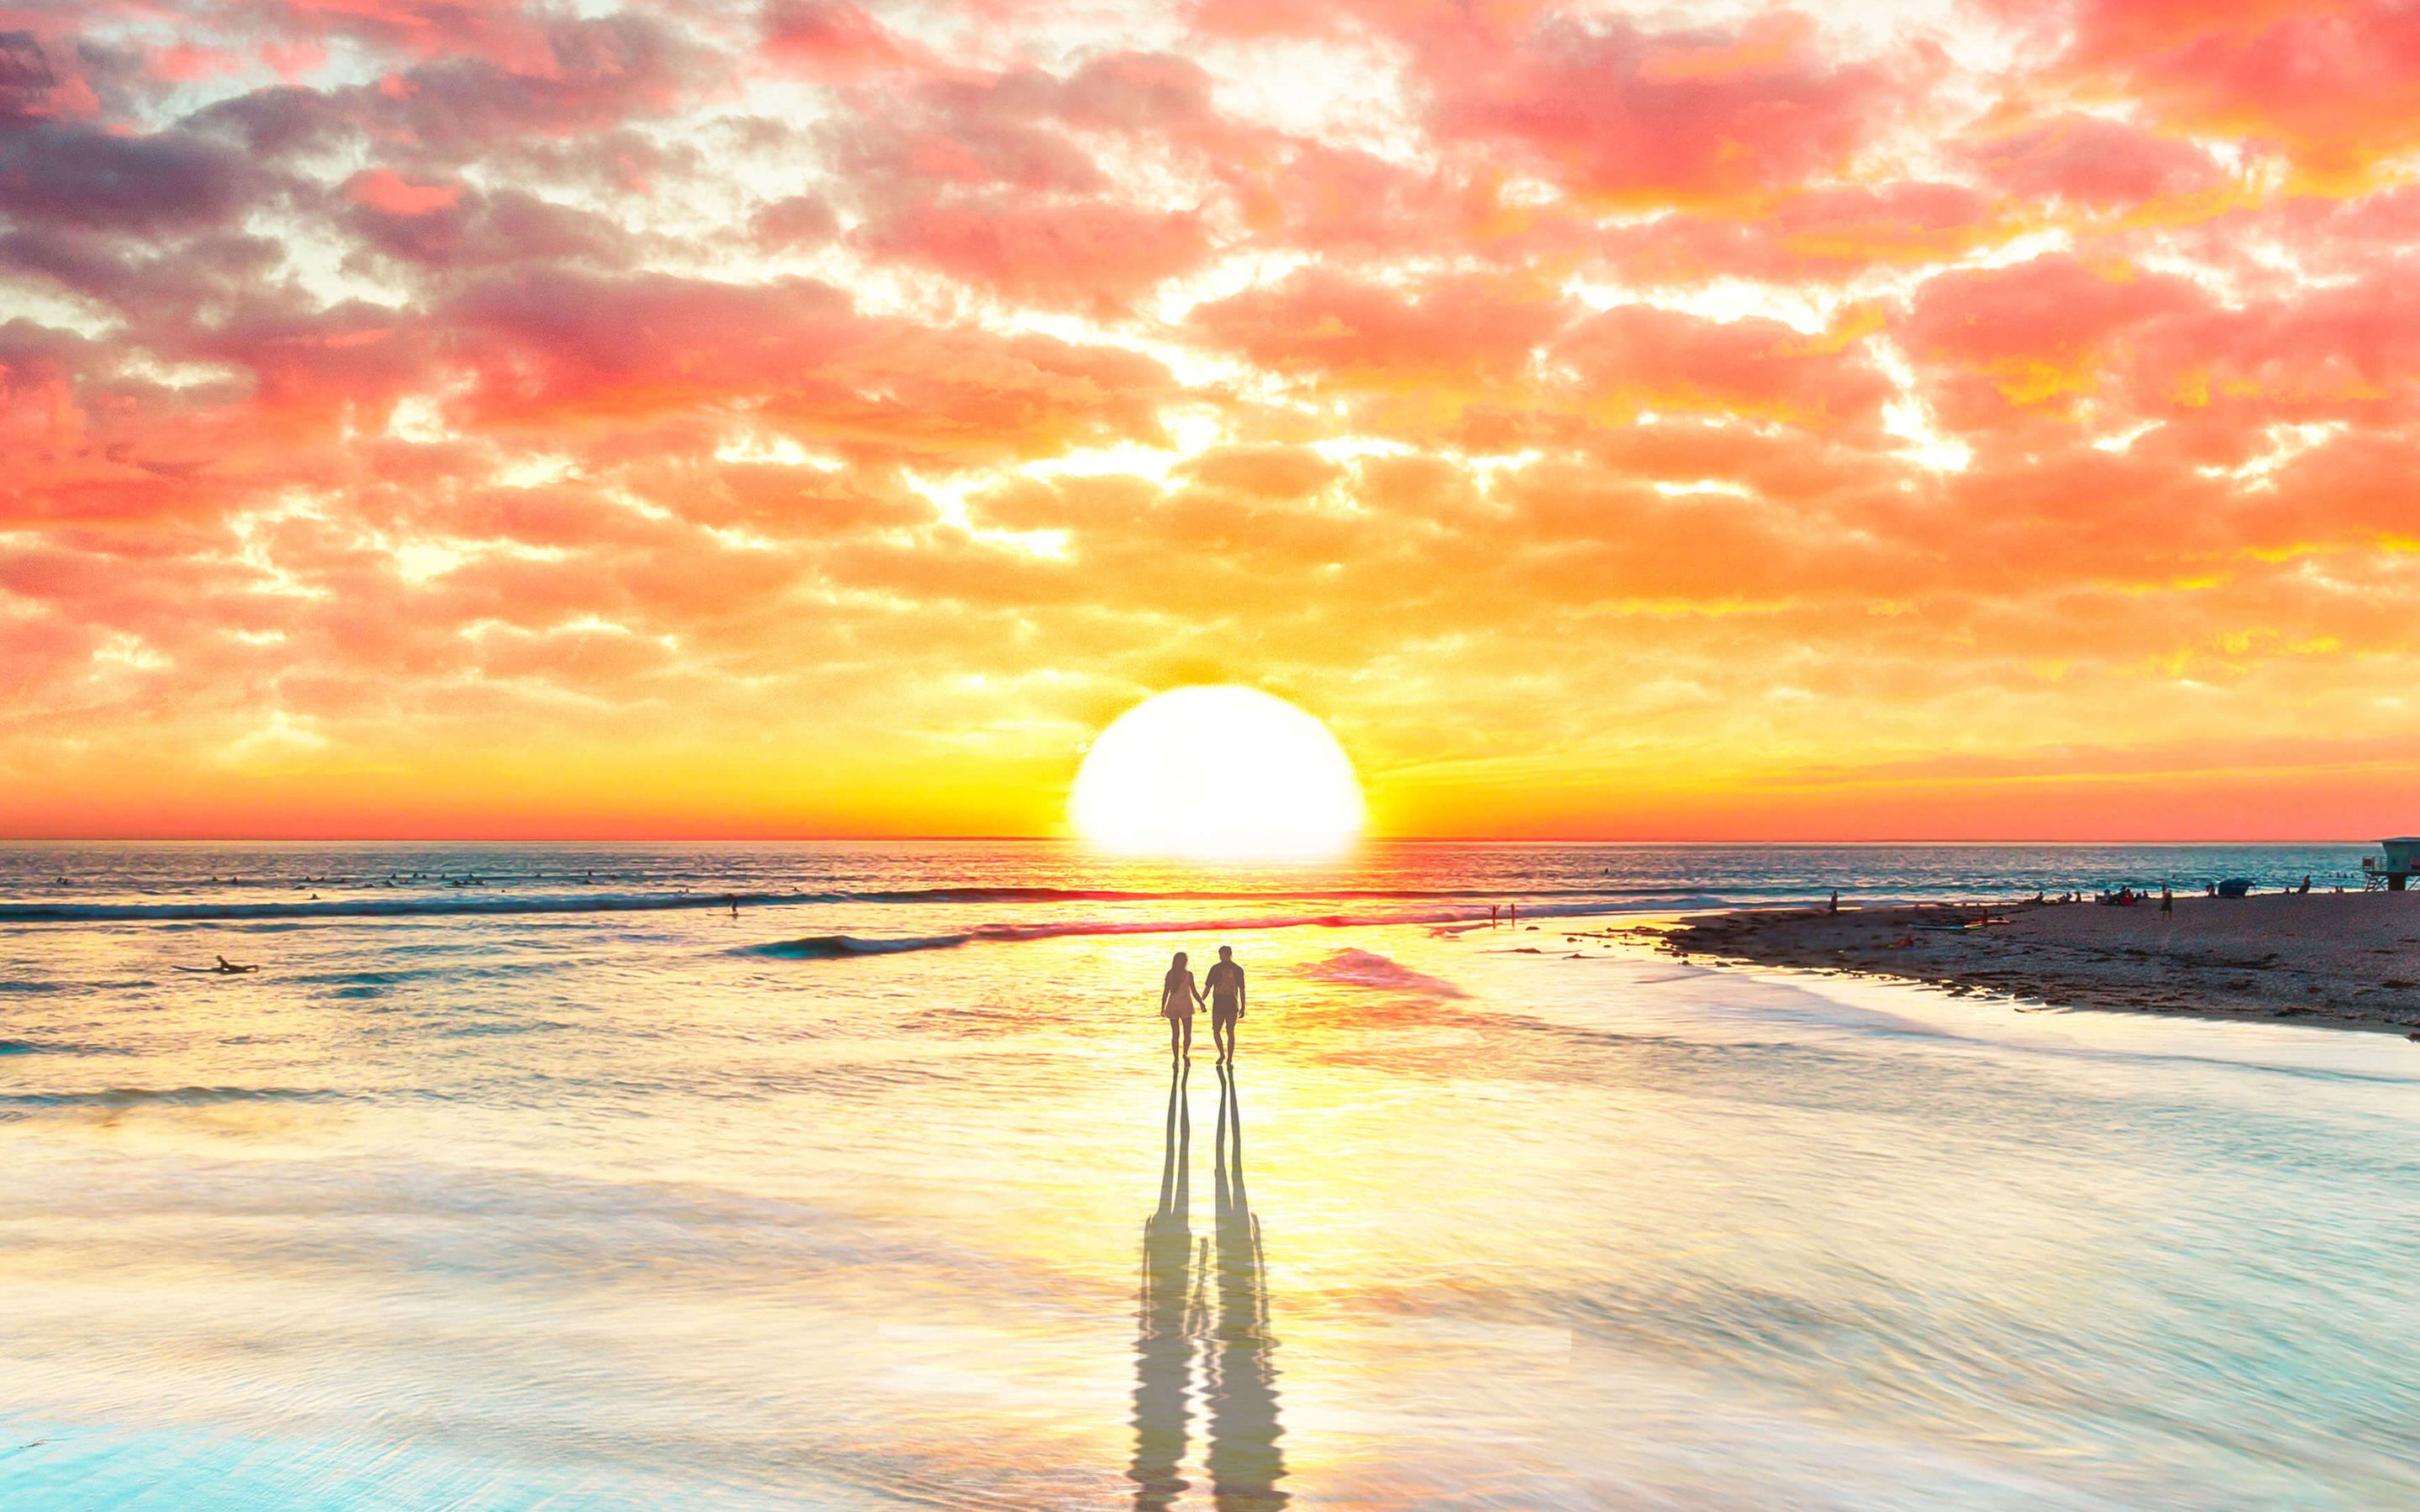 Beach Couple Watching Sunset 4k Macbook Pro Retina HD 4k Wallpaper, Image, Background, Photo and Picture